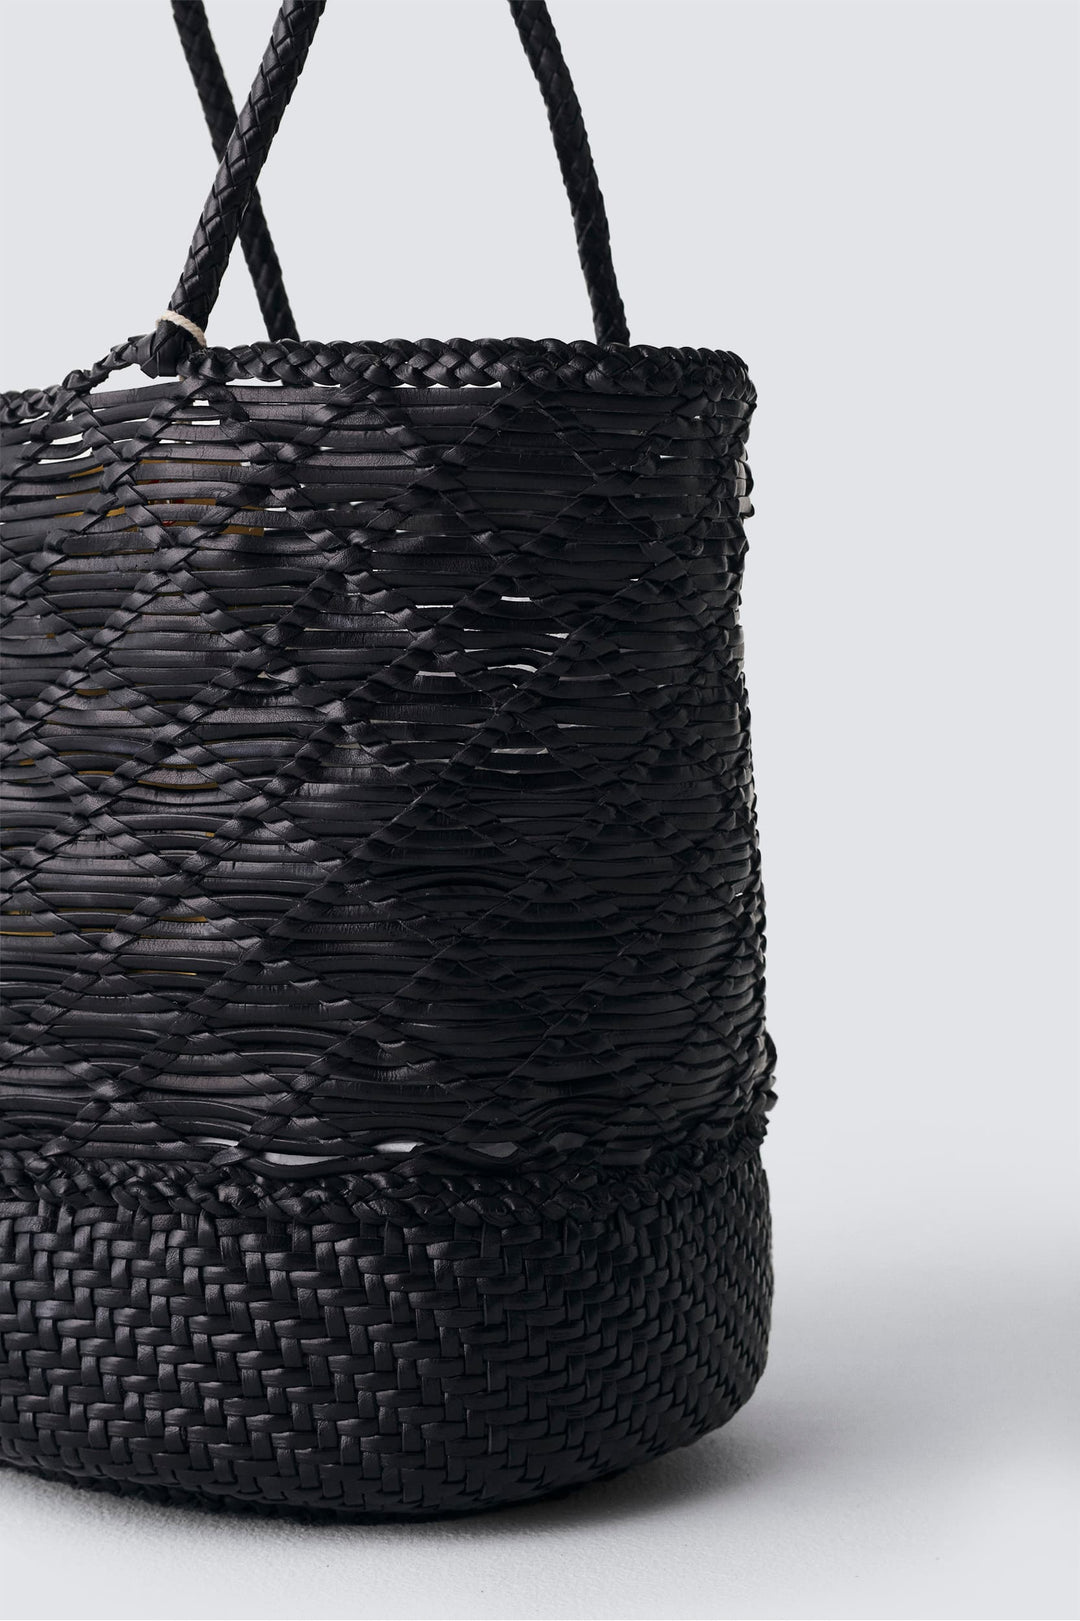 Dragon Diffusion woven leather bag handmade - Corso Bucket Black